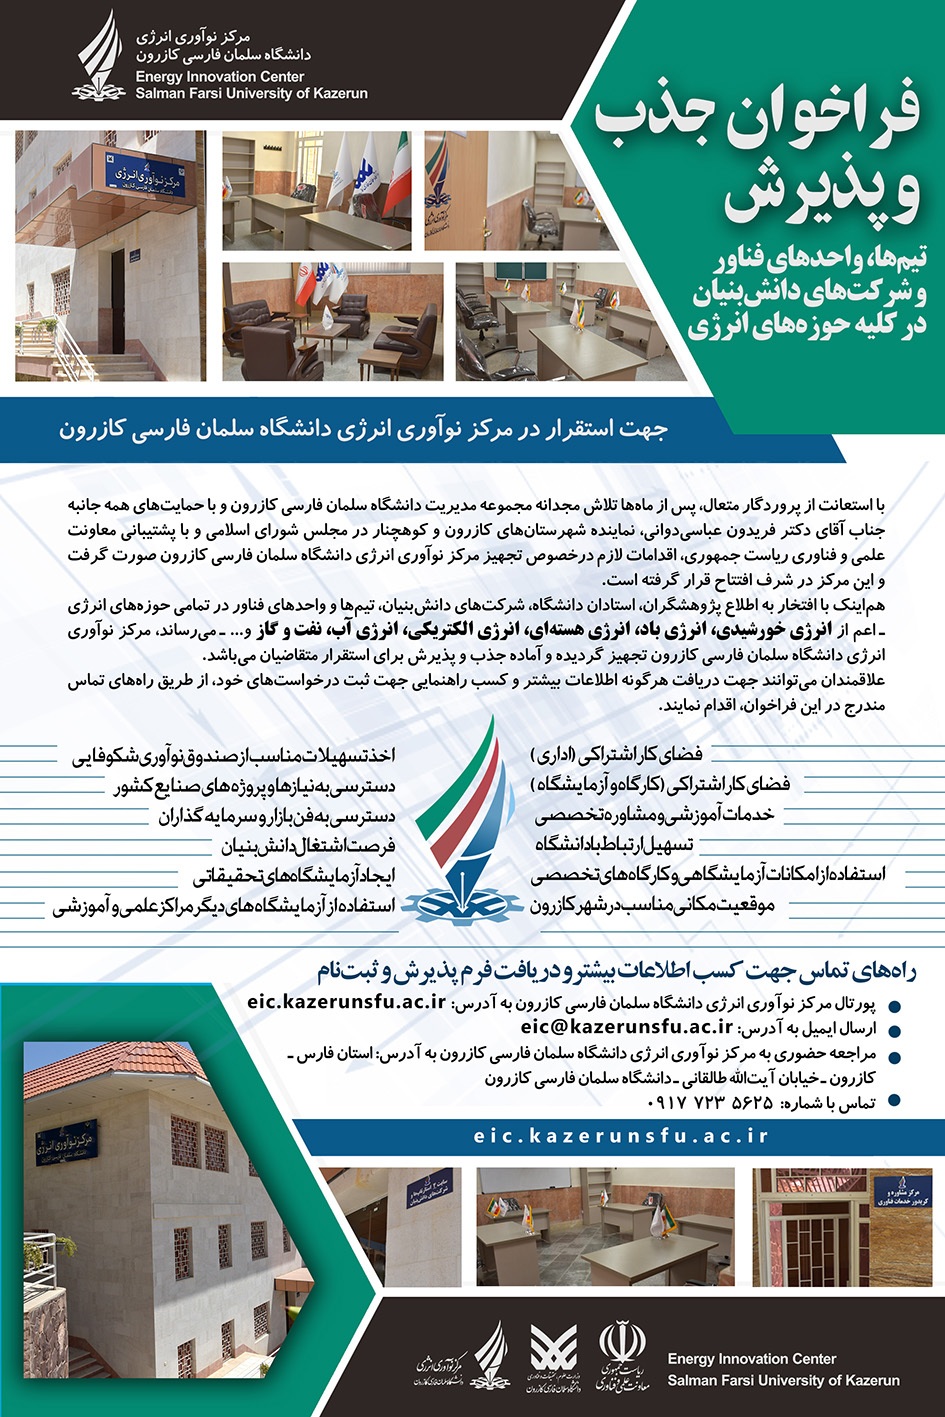 اعلام فراخوان جذب و پذیرش مرکز نوآوری انرژی دانشگاه سلمان فارسی کازرون